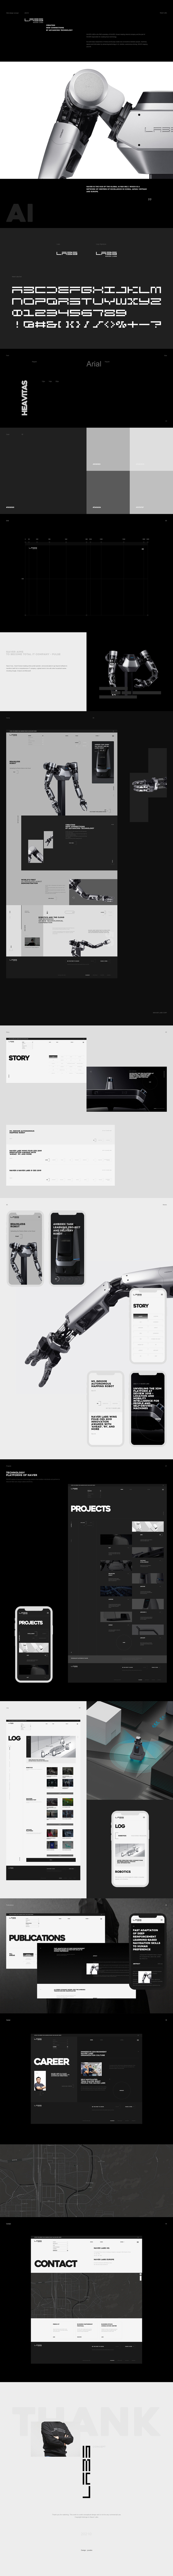 black concept flat intelligent technology interface design official website robot UI Web Design 